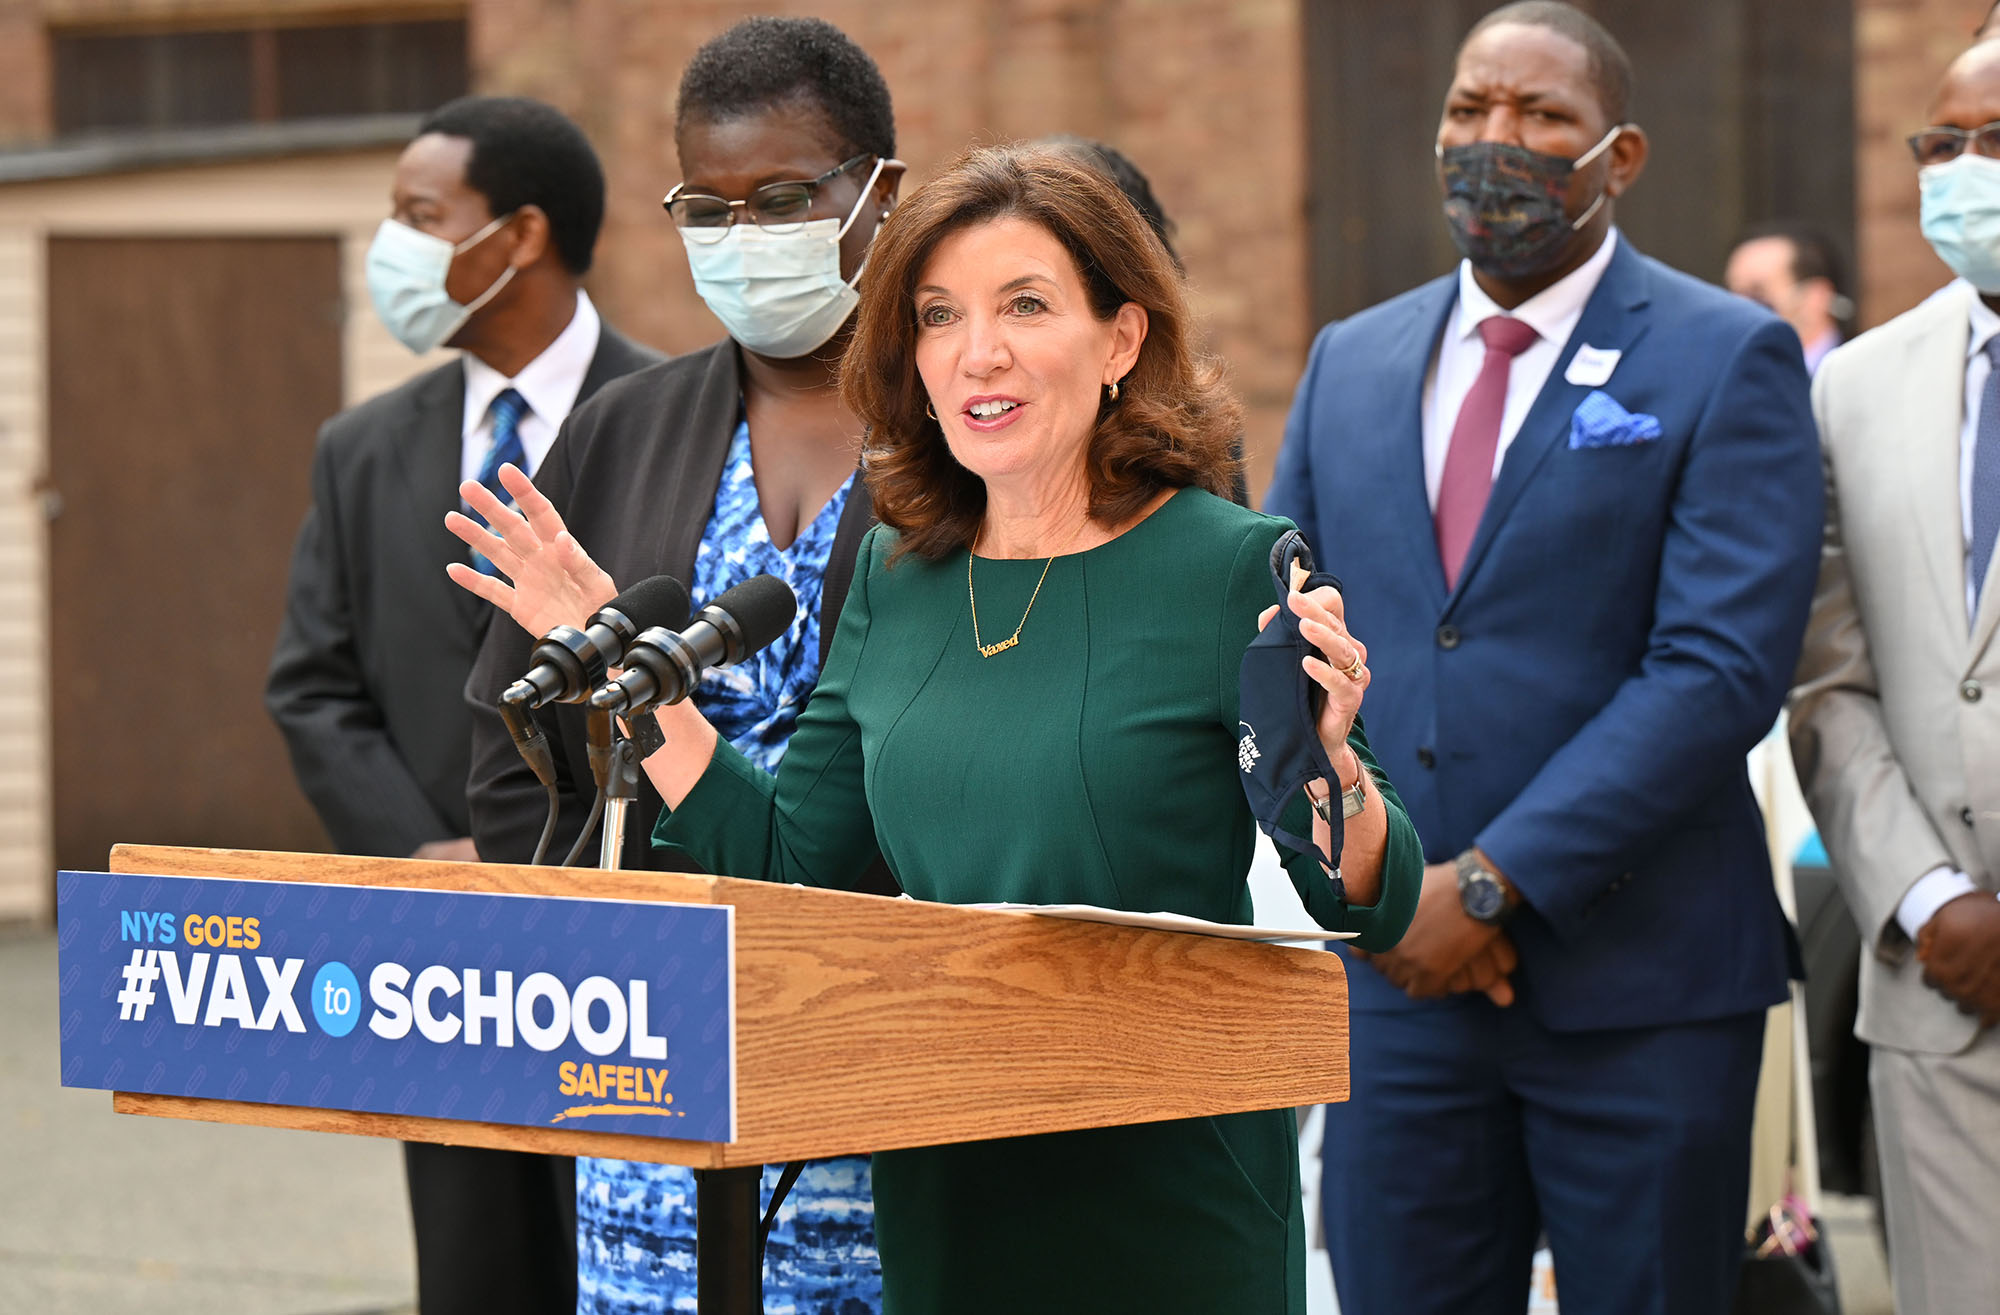 Governor Hochul Kicks Off New York Stateís ìVax to School Safelyî Campaign in Brooklyn